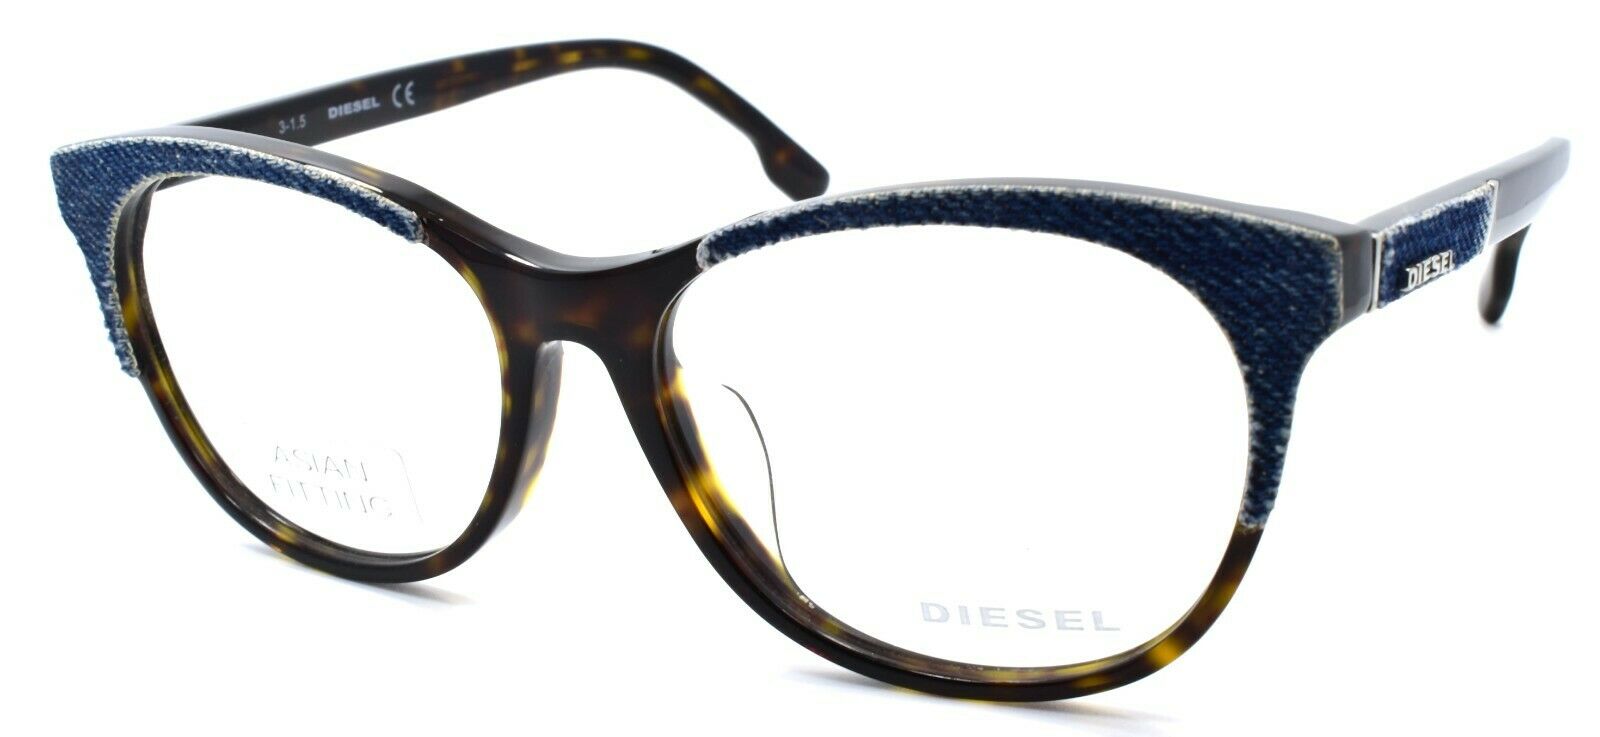 1-Diesel DL5155-F 052 Women's Glasses Frames Asian Fit 56-16-145 Dark Havana Denim-664689707812-IKSpecs